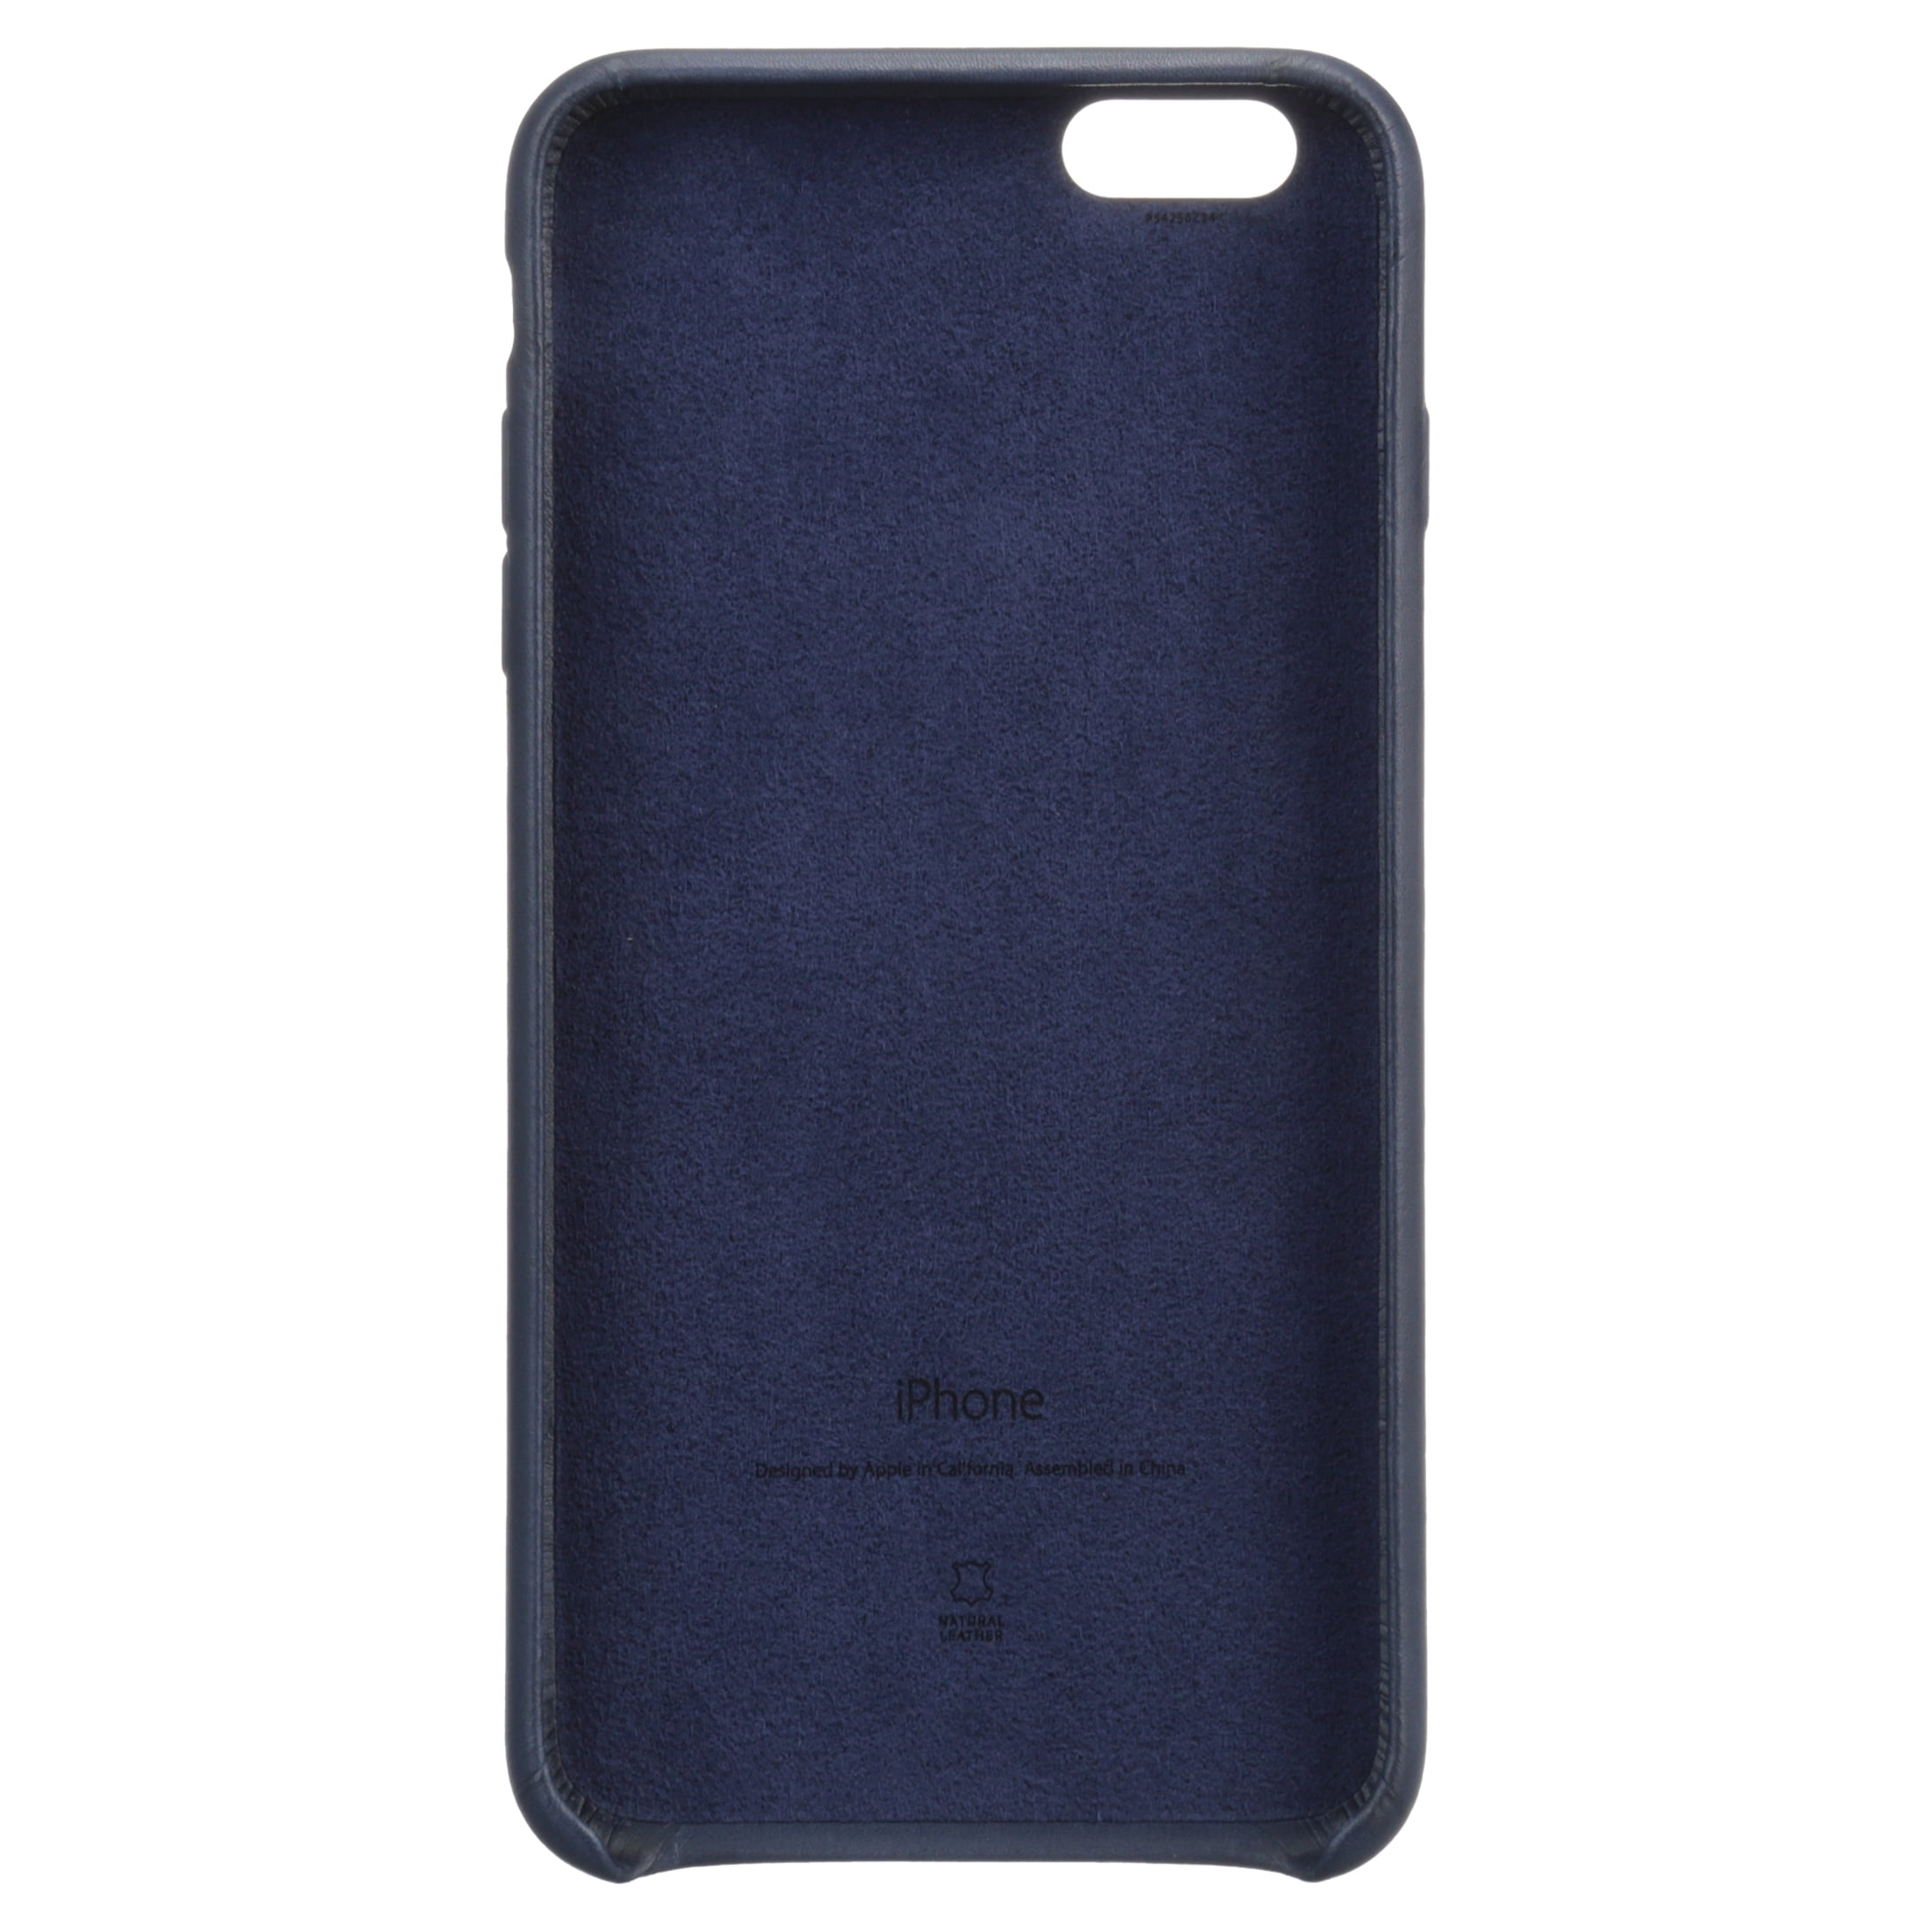 Bereiken Graf navigatie Apple Leather Case for iPhone 6s Plus and iPhone 6 Plus - Midnight Blue -  Walmart.com